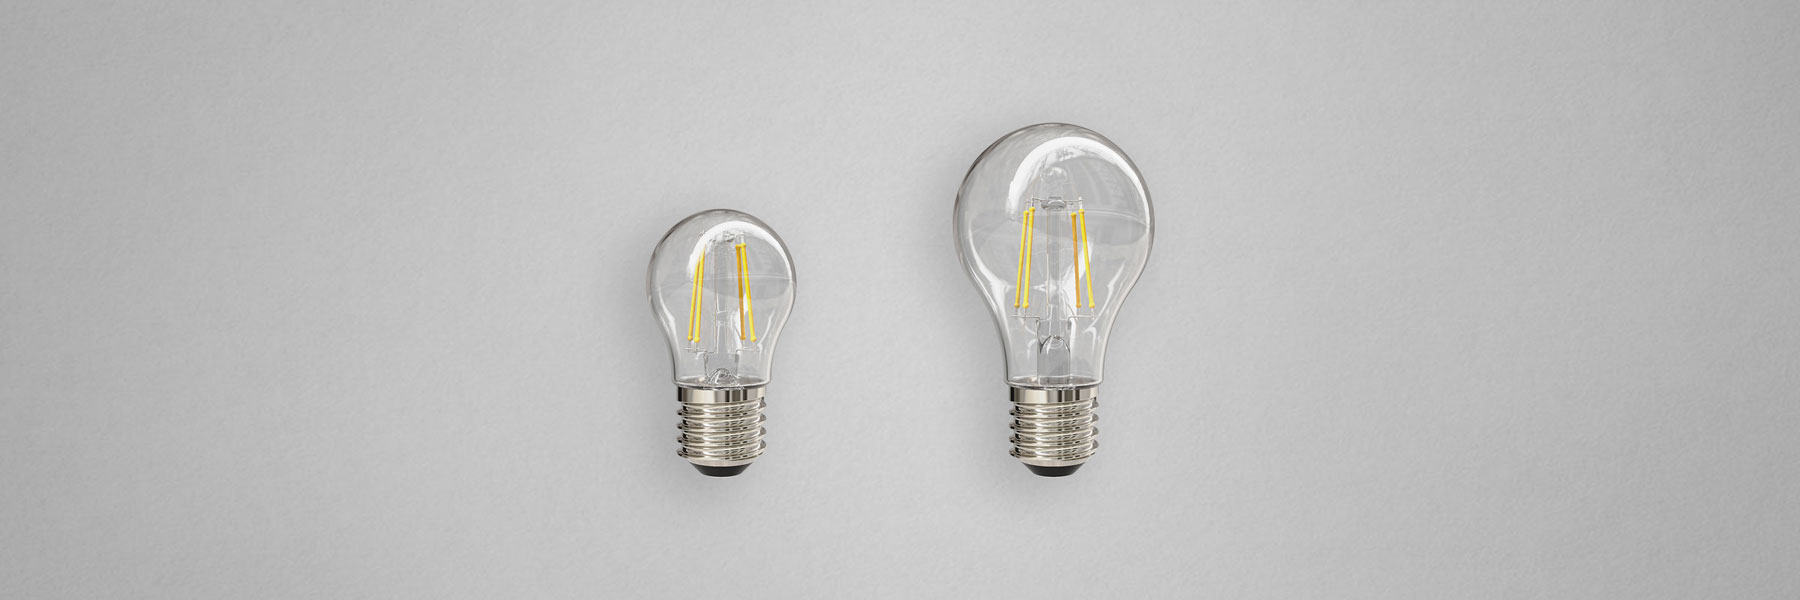 Fibram LED Filament Bulbs